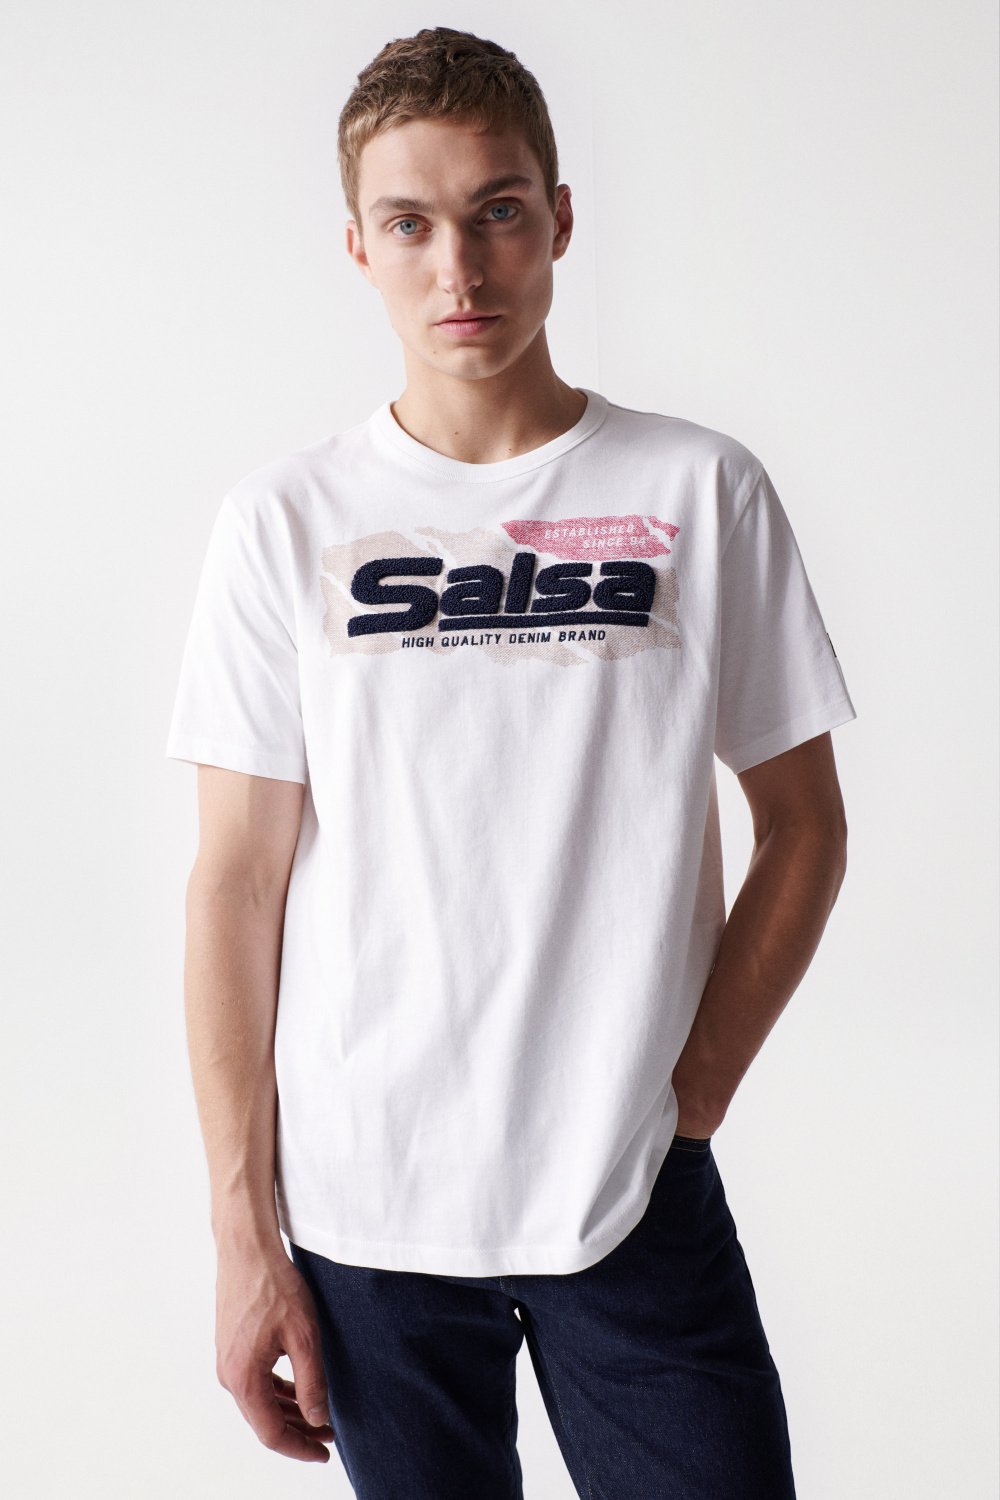 T-SHIRT WITH SALSA NAME AND DESIGN - Salsa